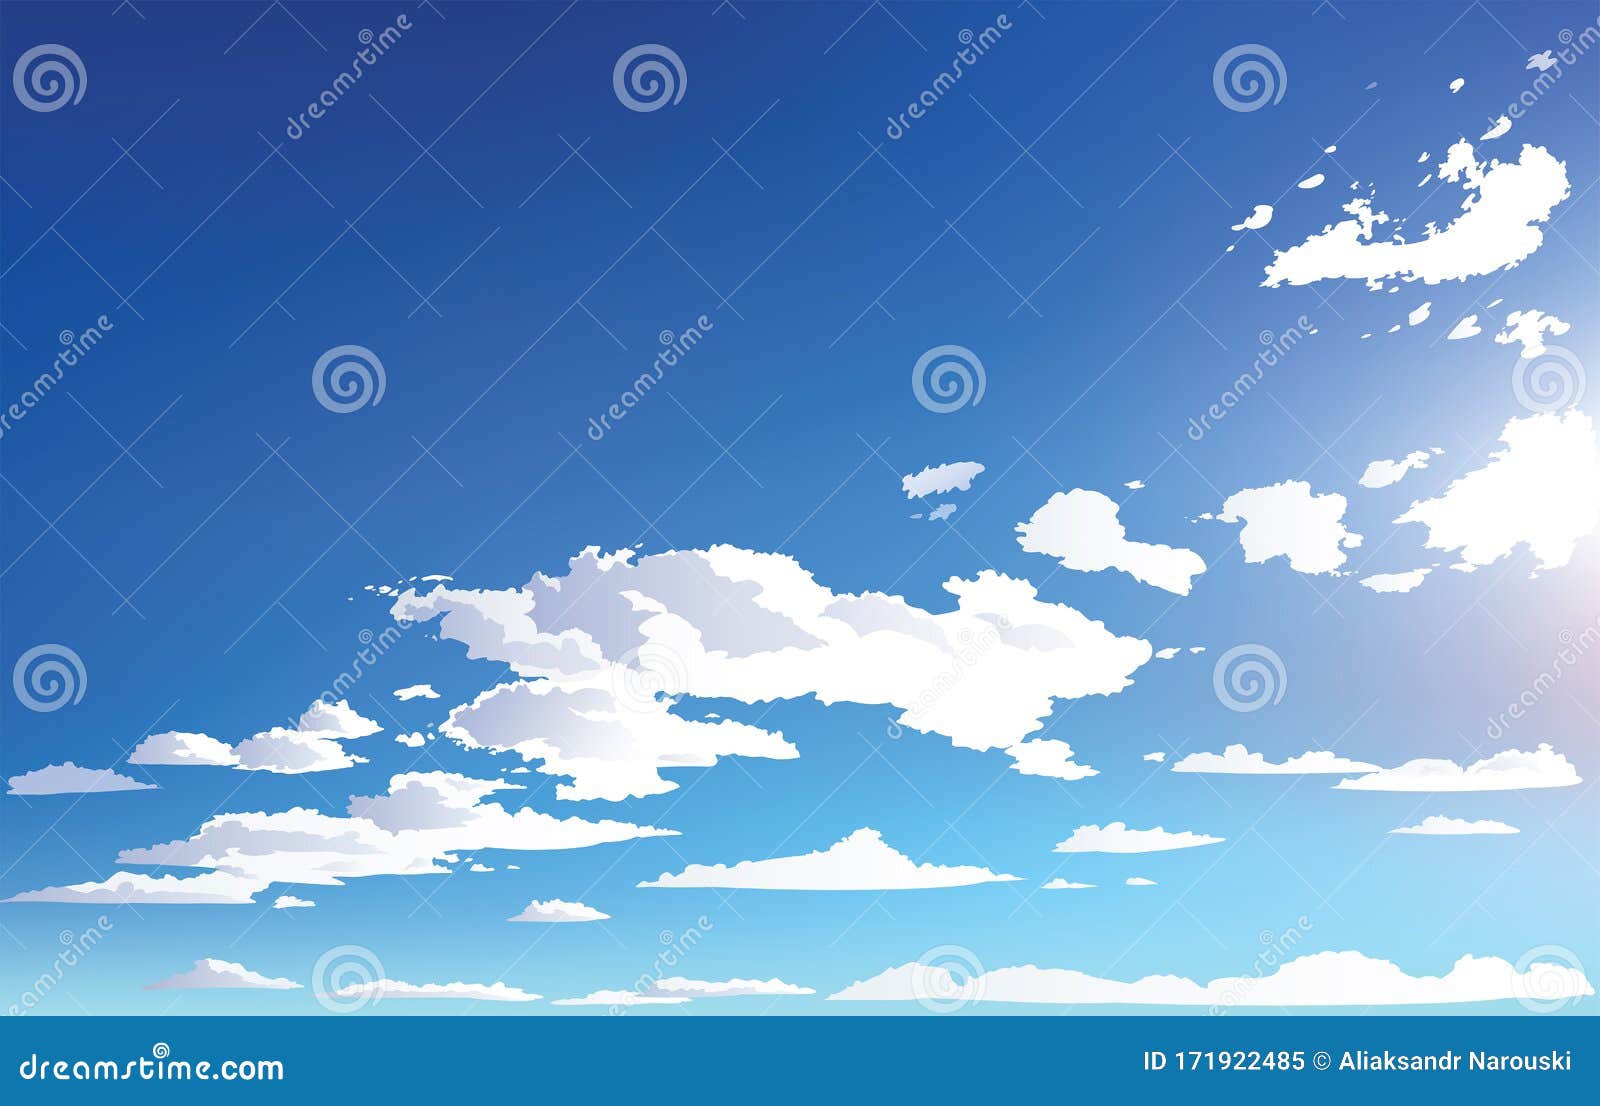 Cloudy sky background. Cartoon atmospheric anime scenery wit